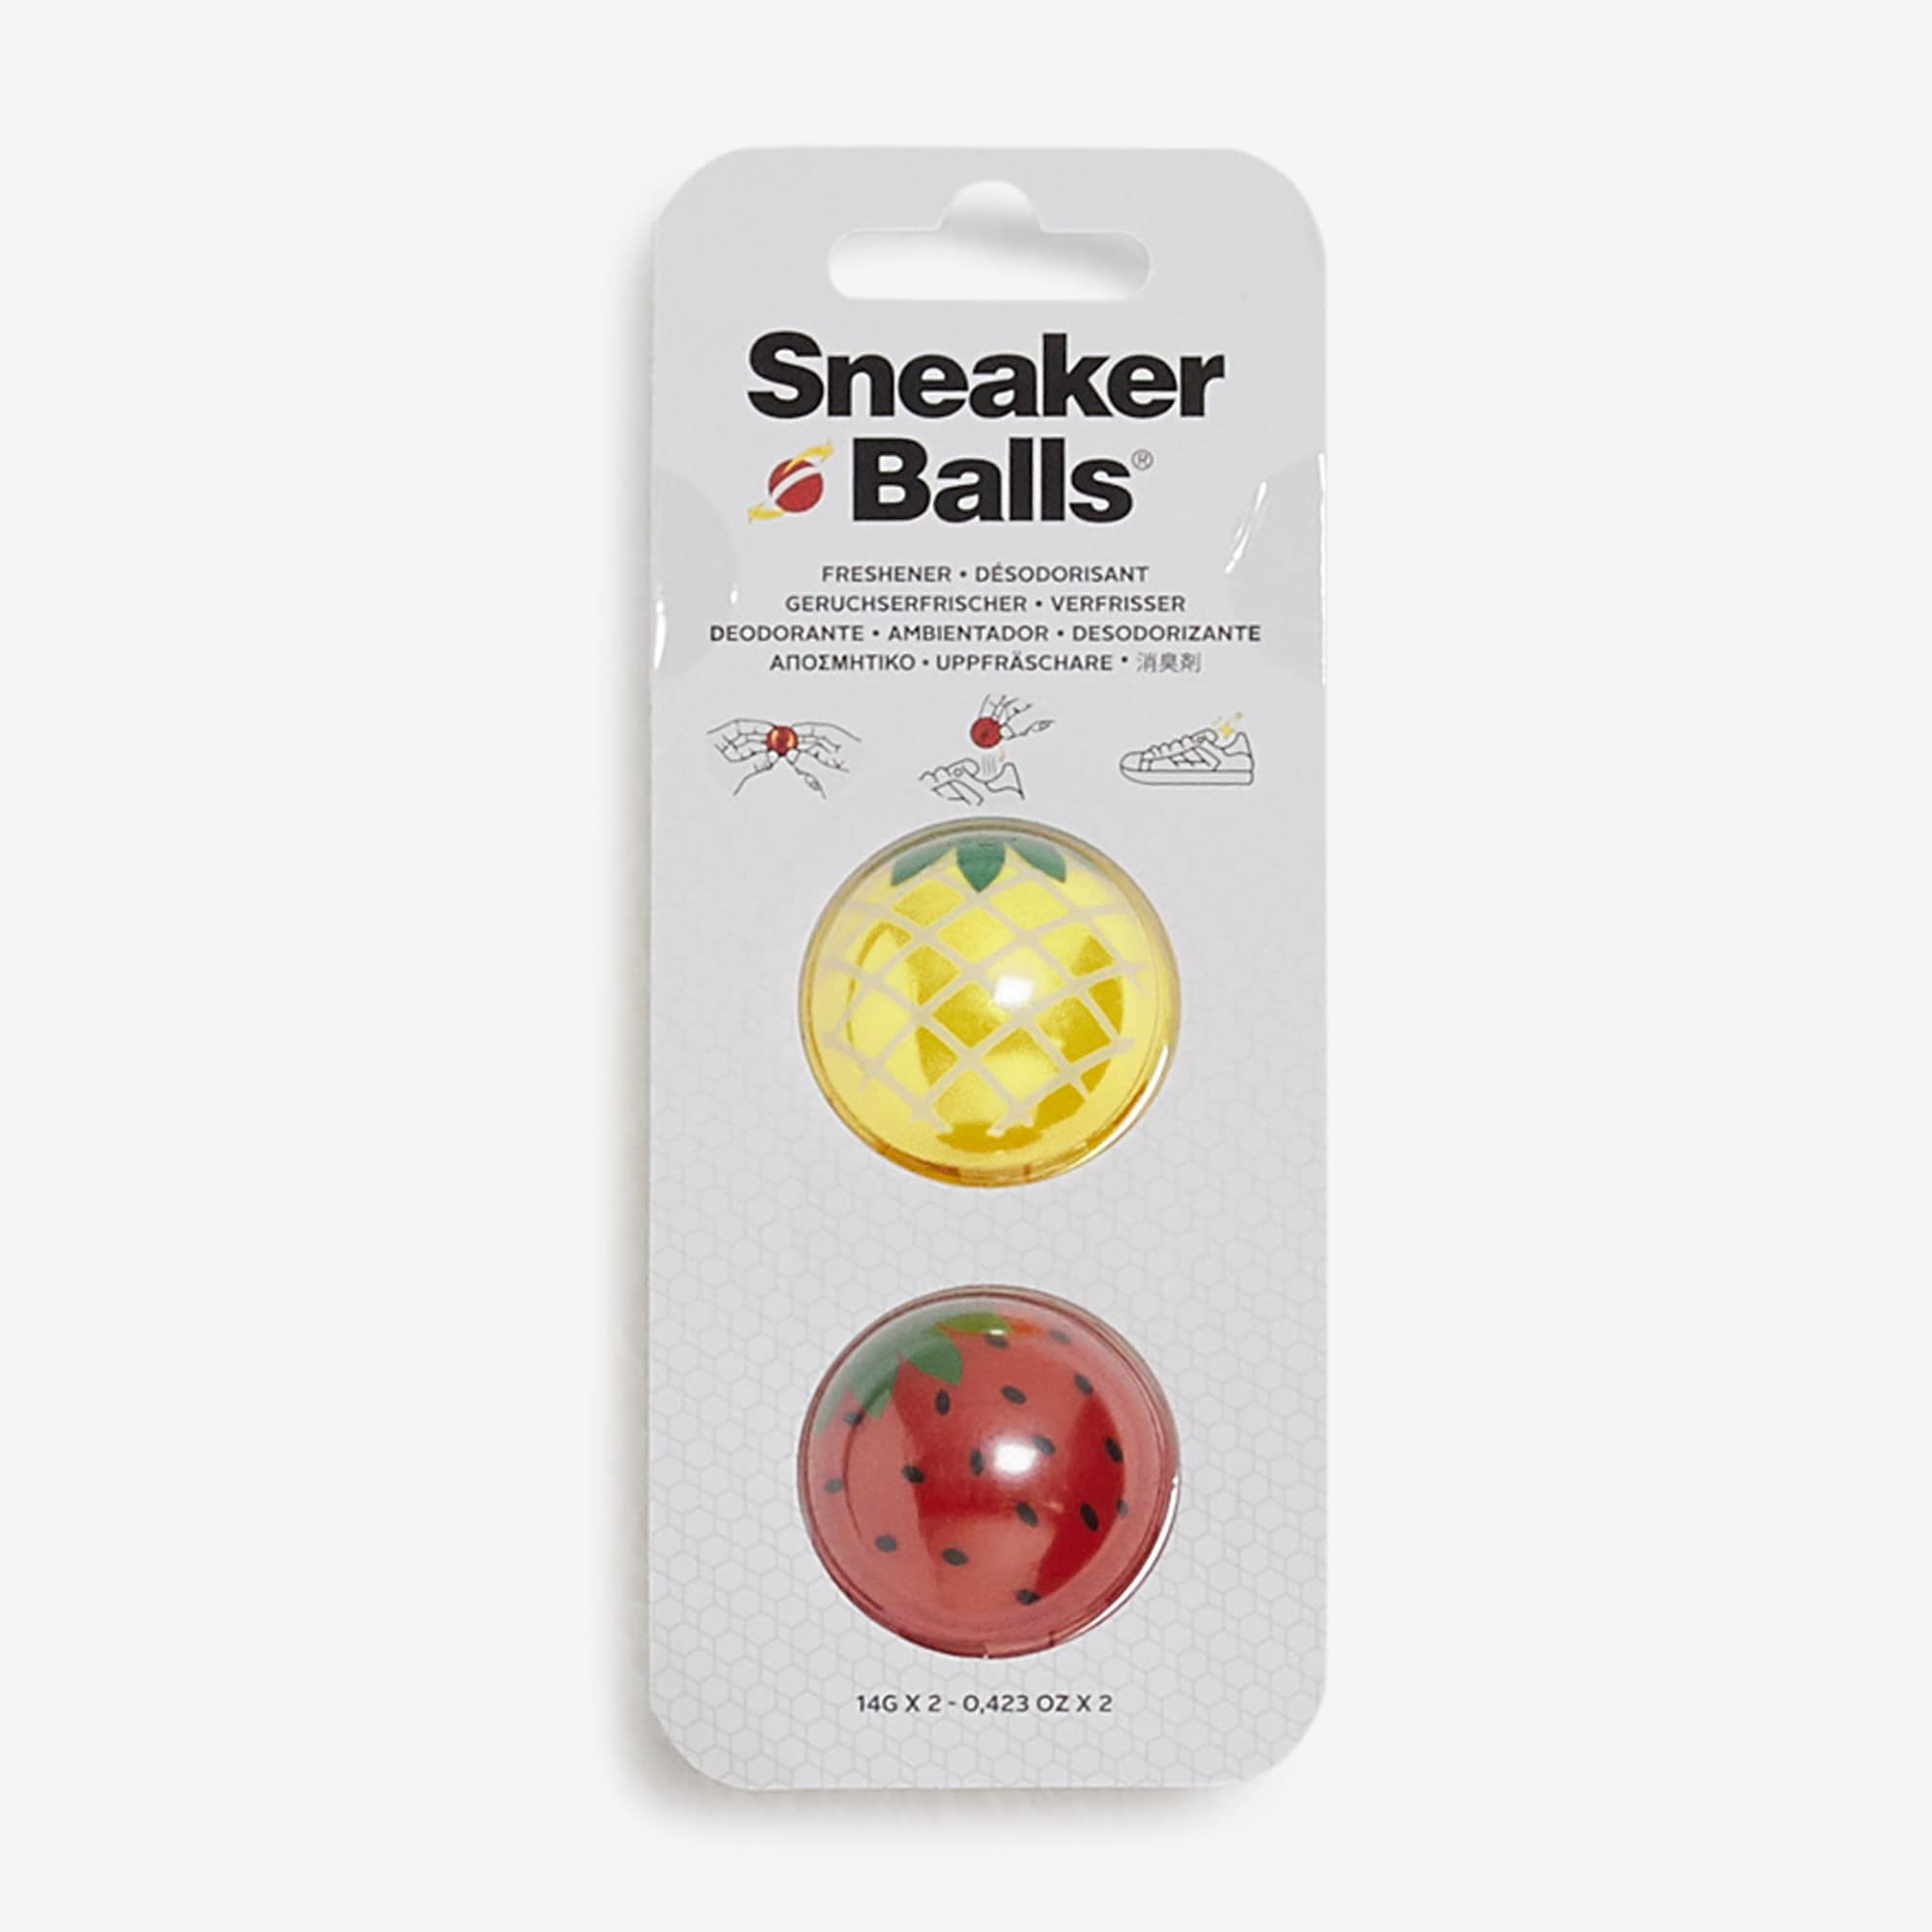 sneaker balls desodorisantes fraise  rouge/jaune